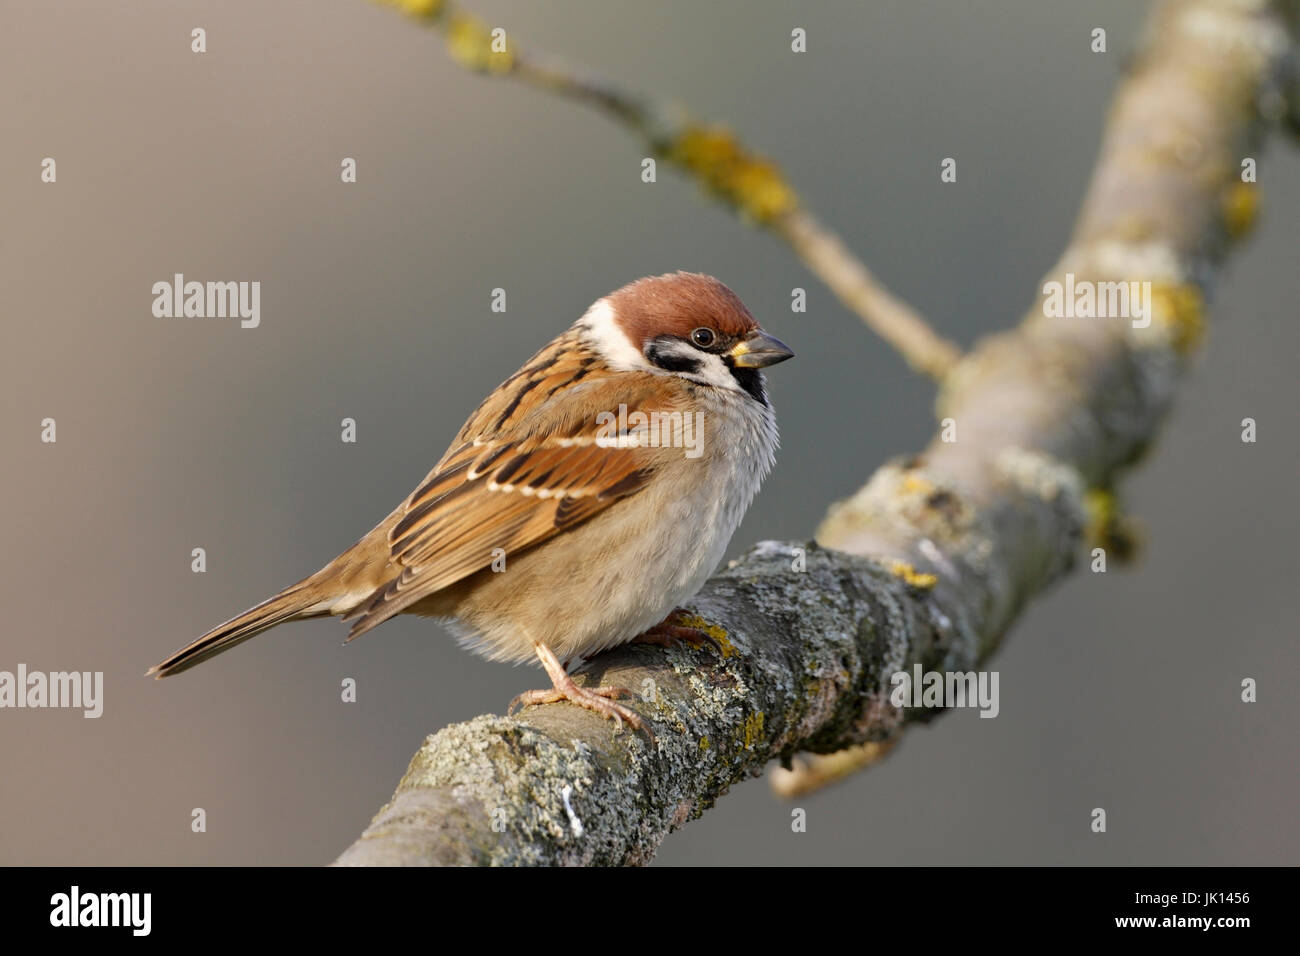 Campo, sparrow sparrow, Passer montanus,,, Spatz Feldsperling Foto de stock